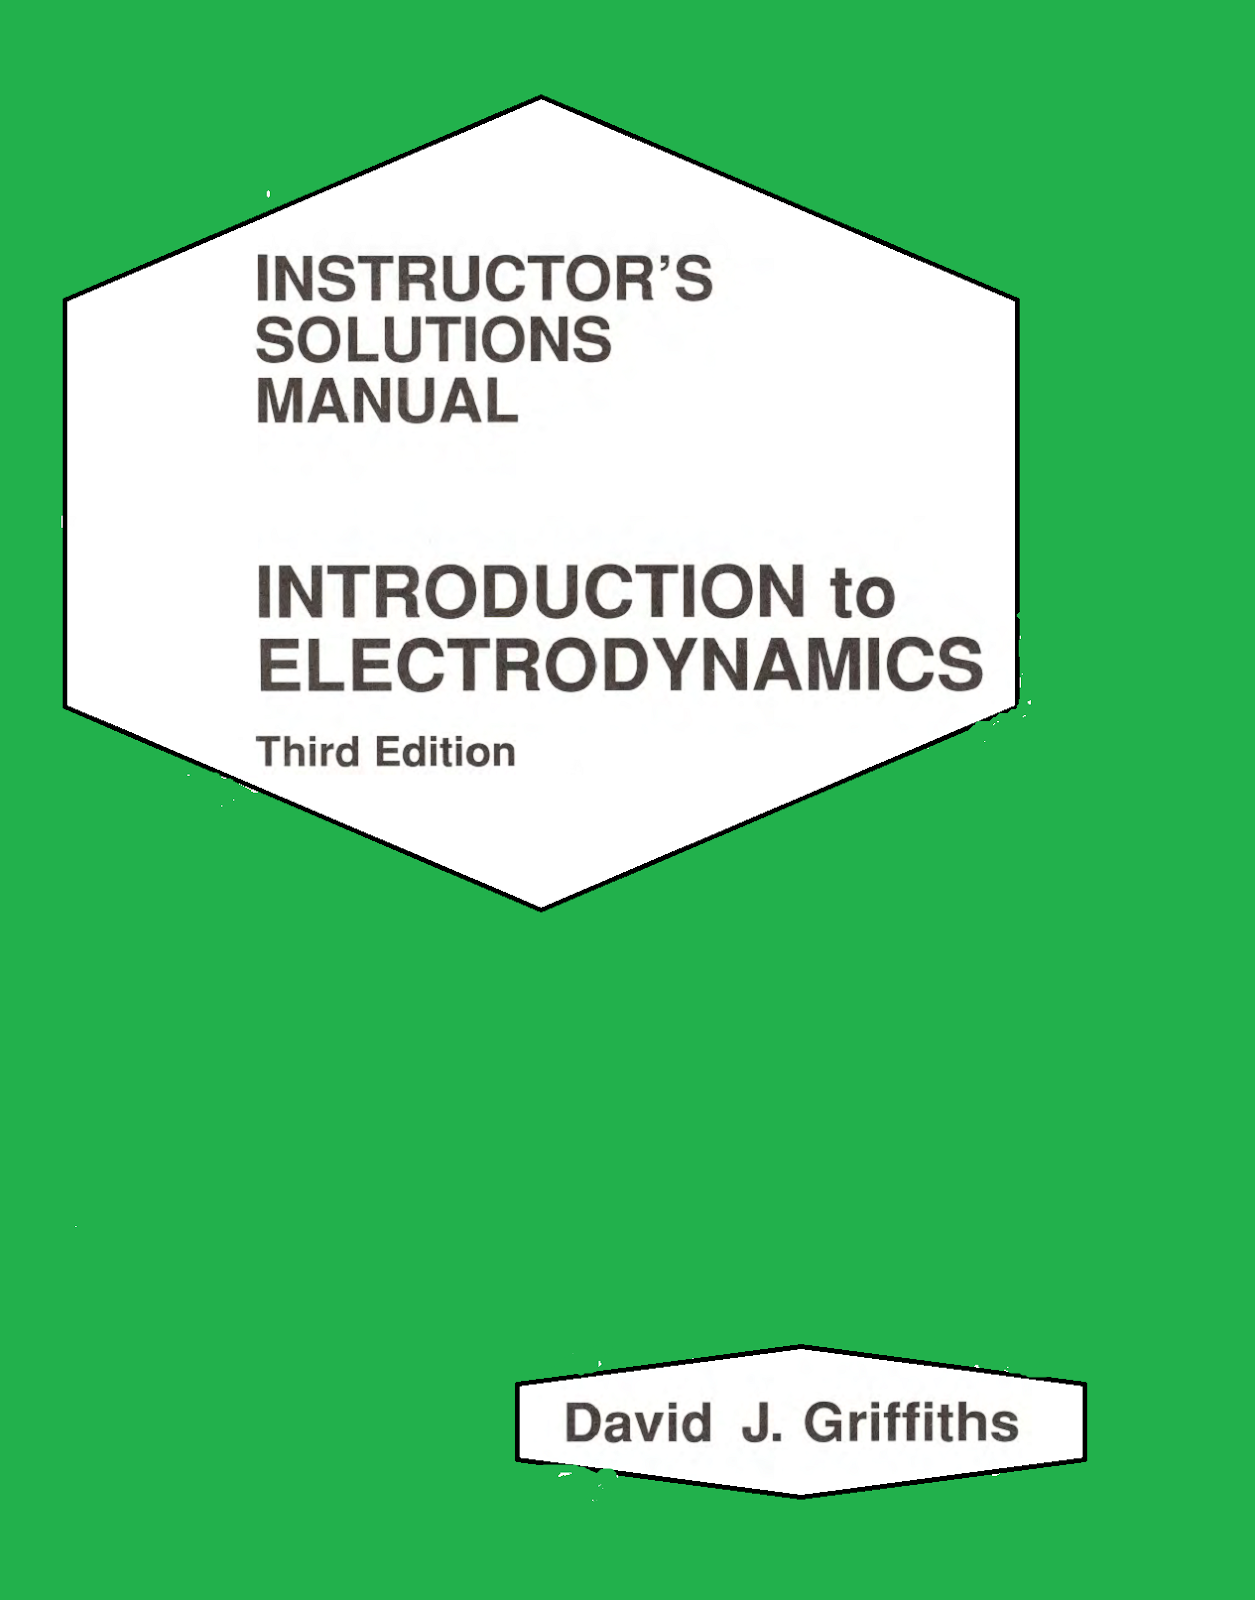 introduction to electrodynamics pdf